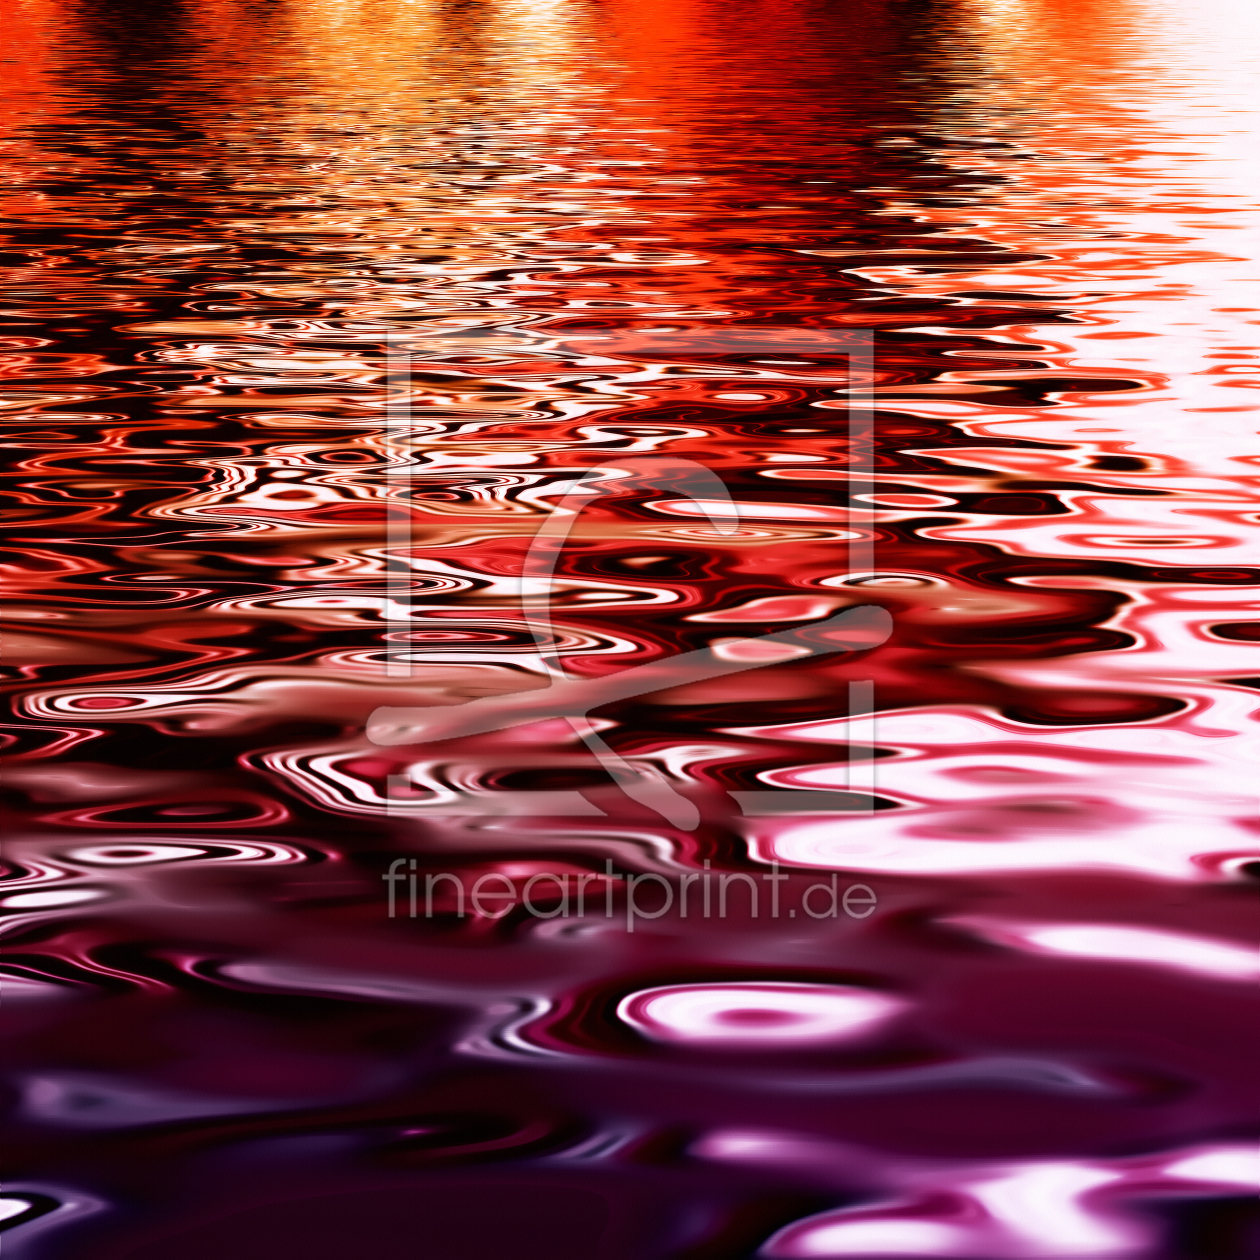 Bild-Nr.: 10412577 Aqua - purpur - orange erstellt von DagmarMarina